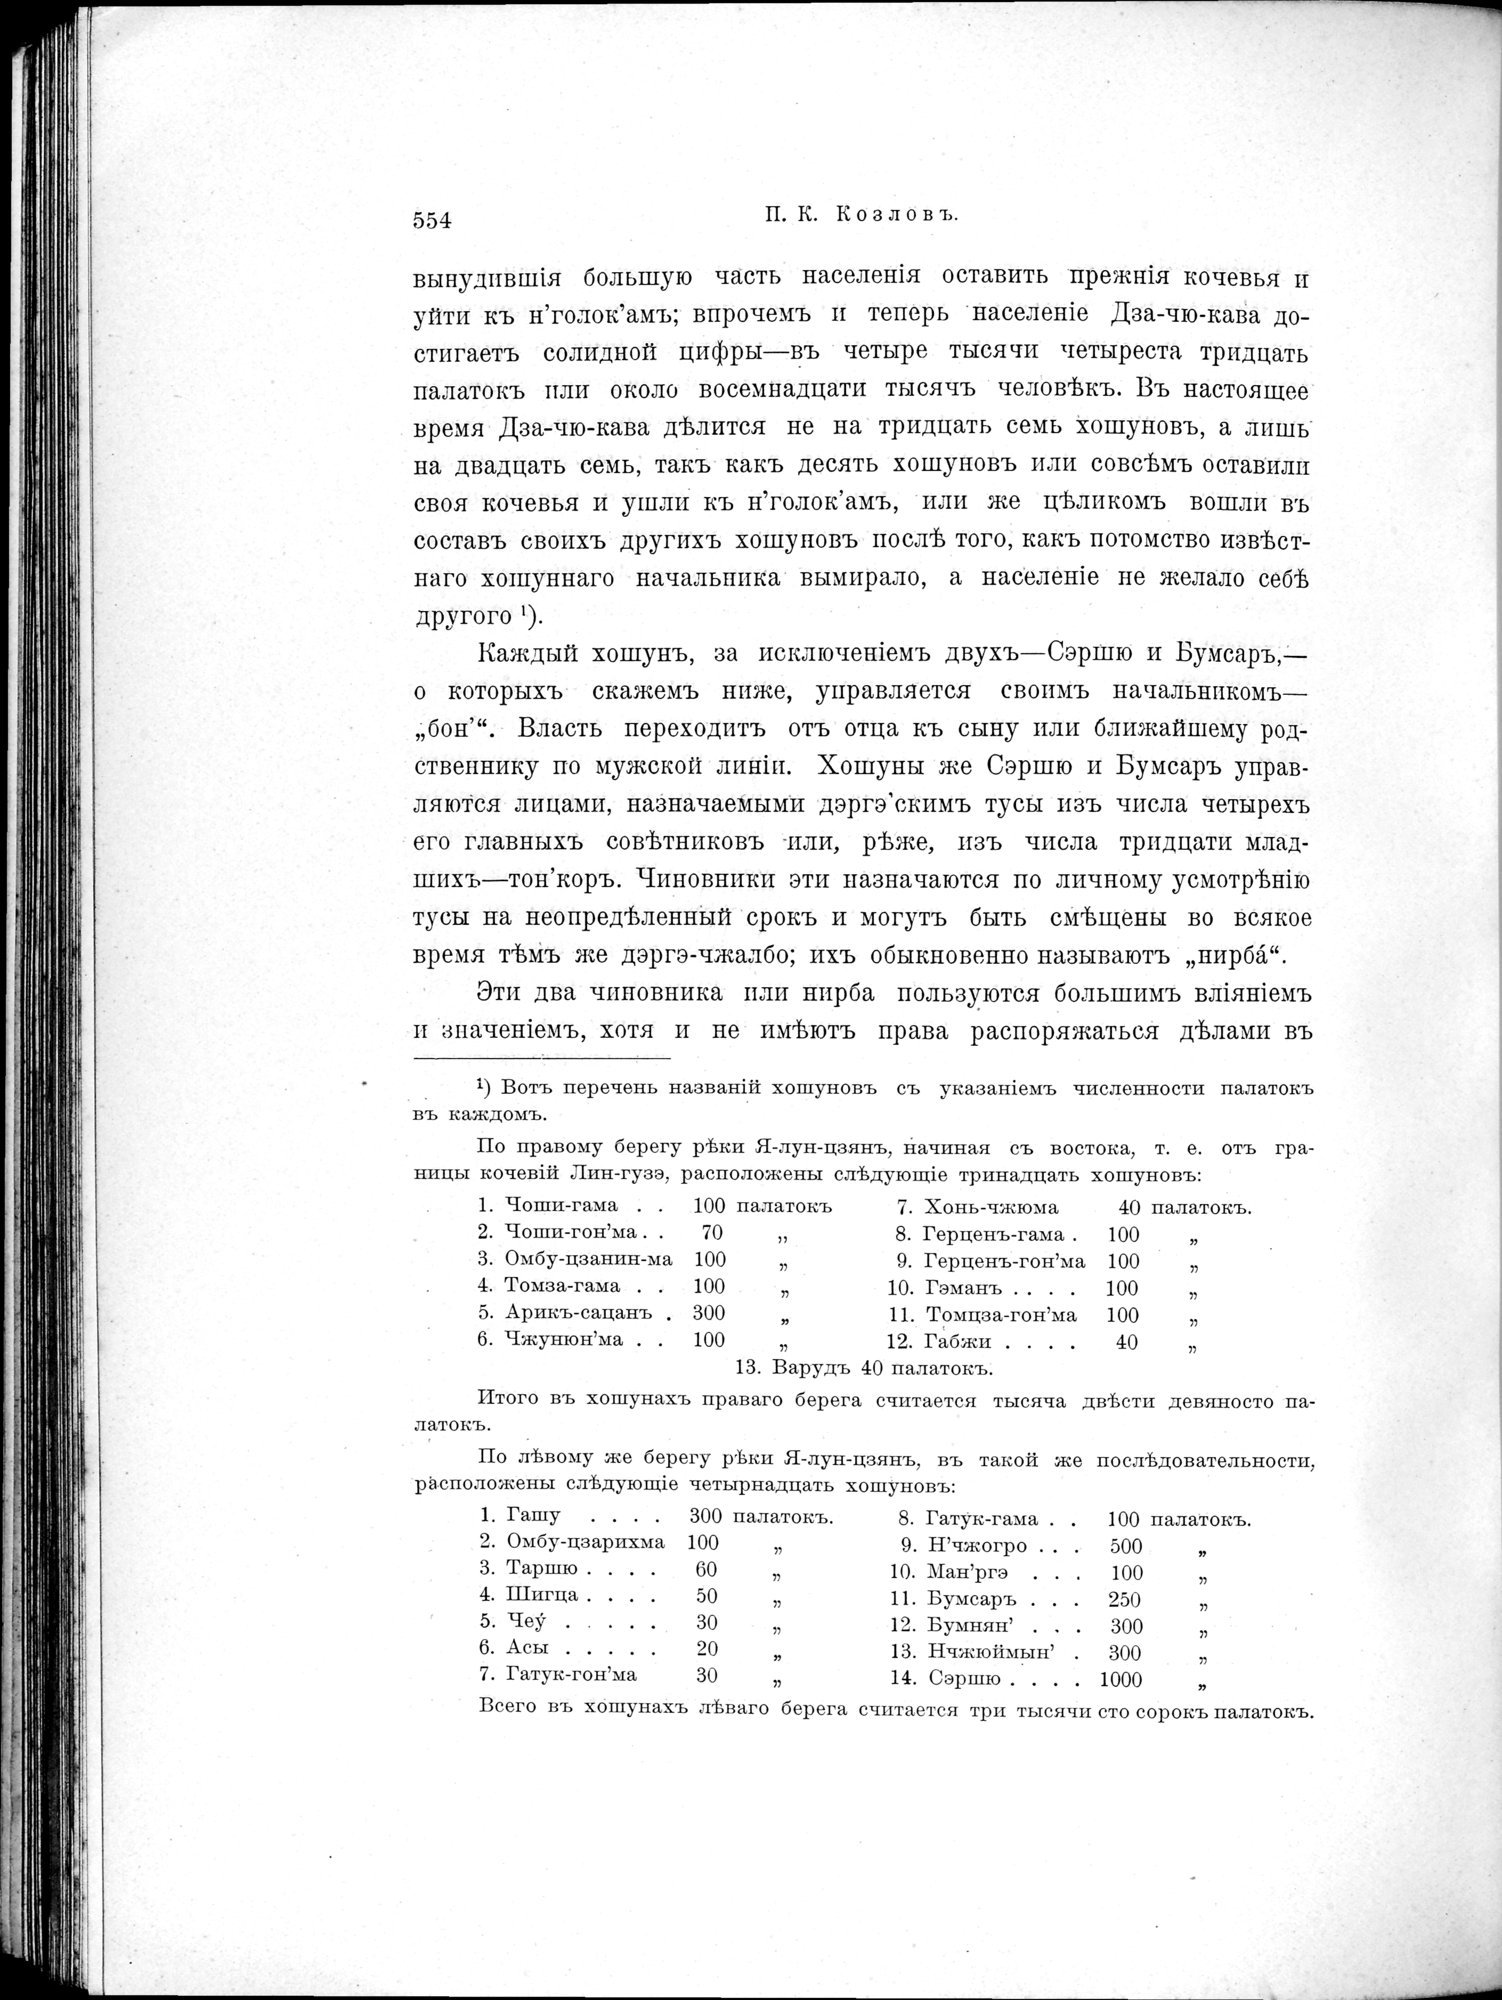 Mongoliia i Kam : vol.2 / Page 378 (Grayscale High Resolution Image)